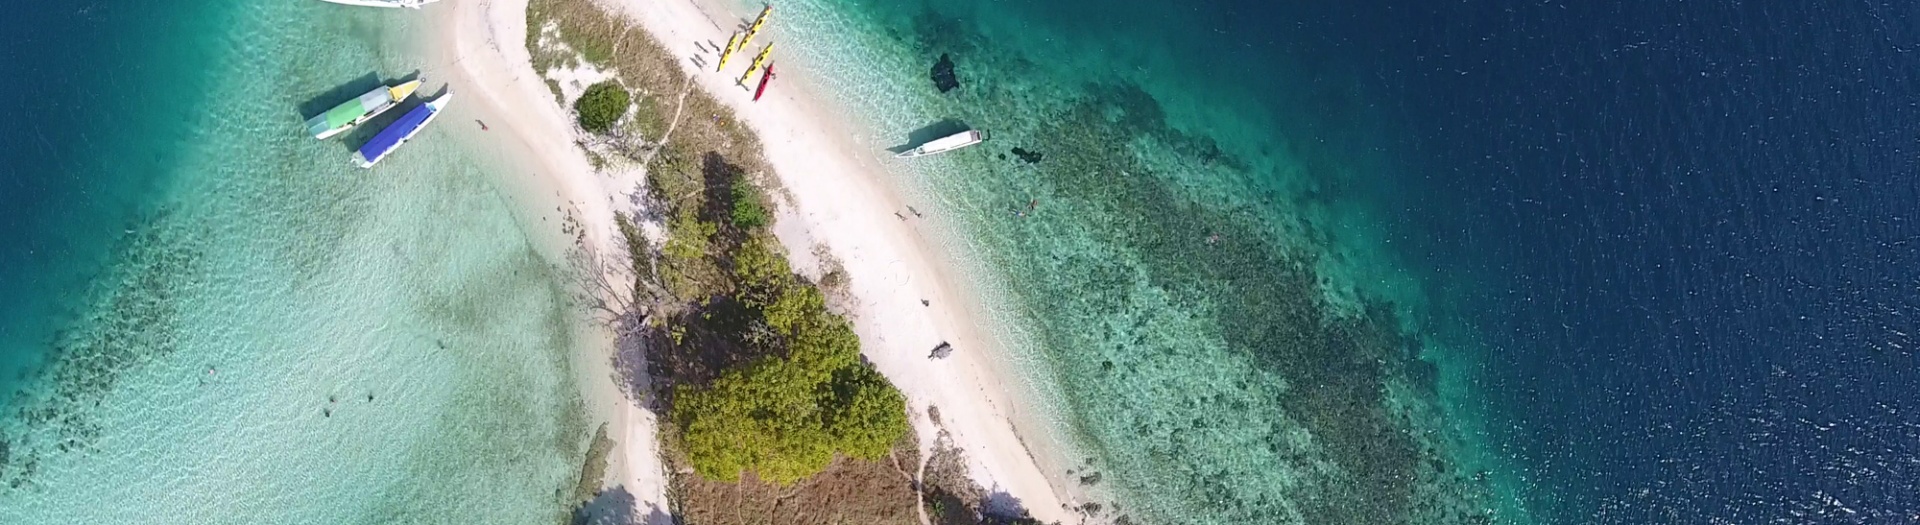 Sea Kayaking the Komodo archipelago